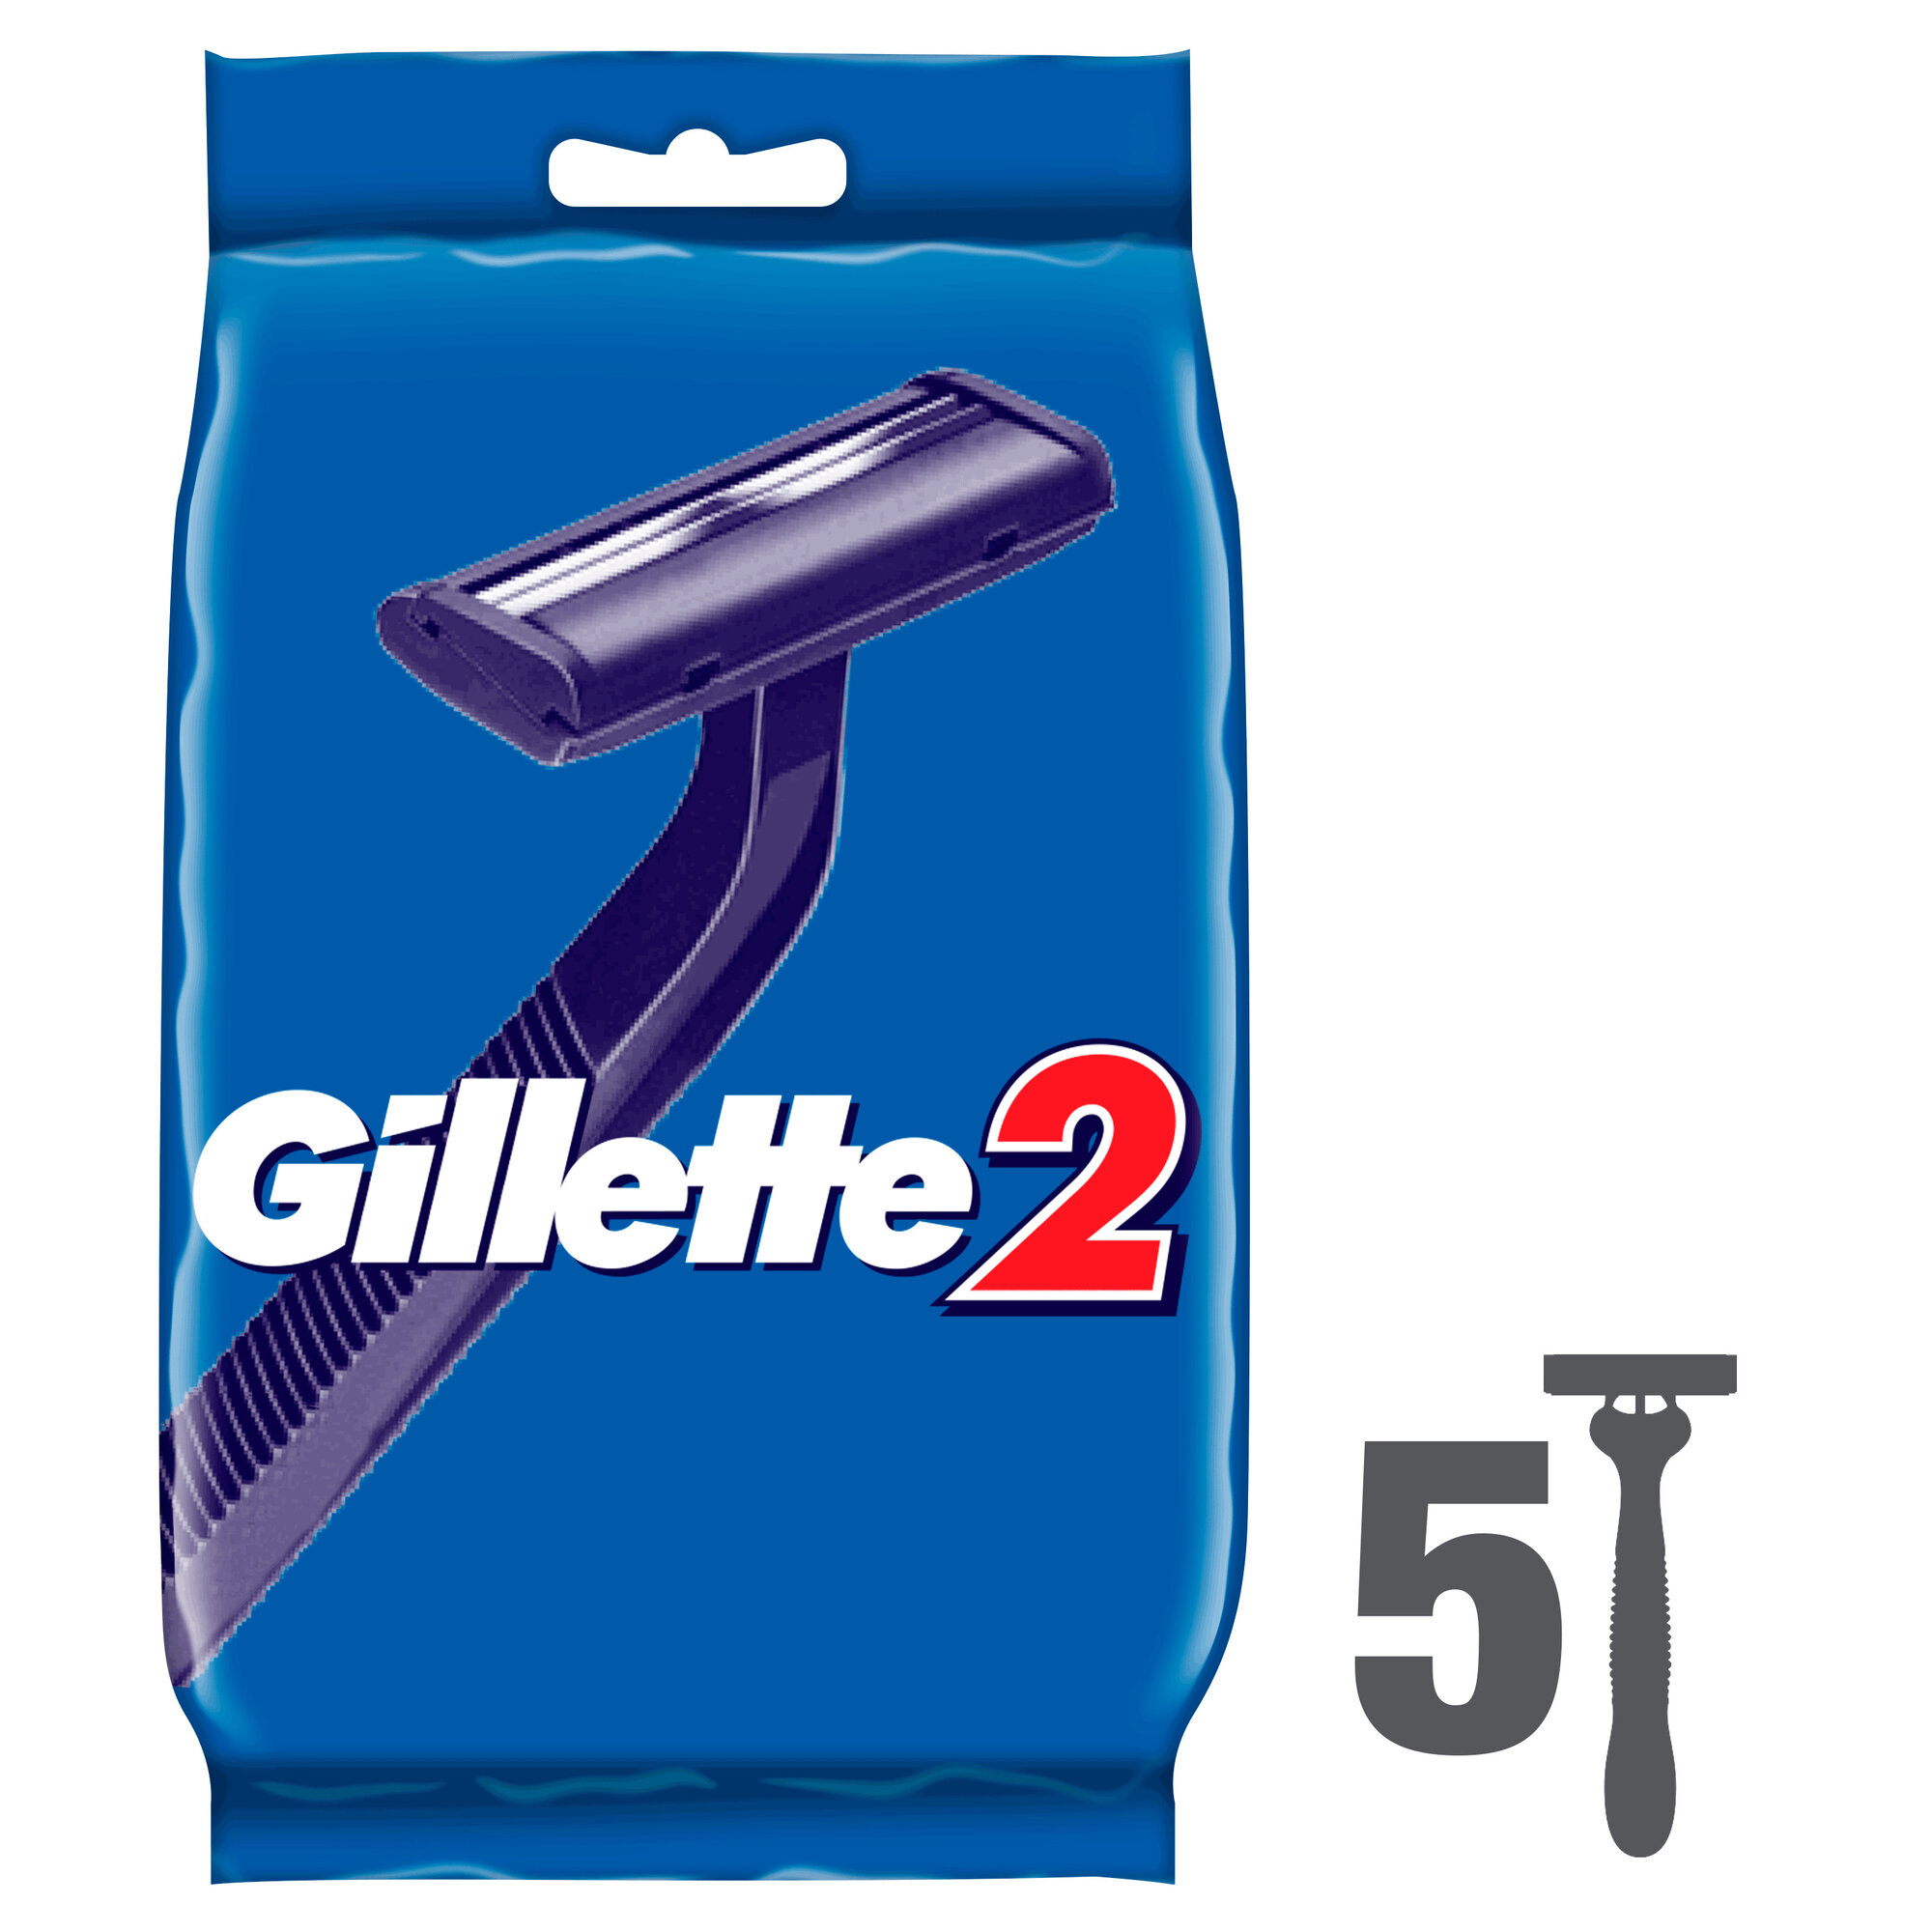 Бритвы Gillette 2 одноразовые, 5 шт.